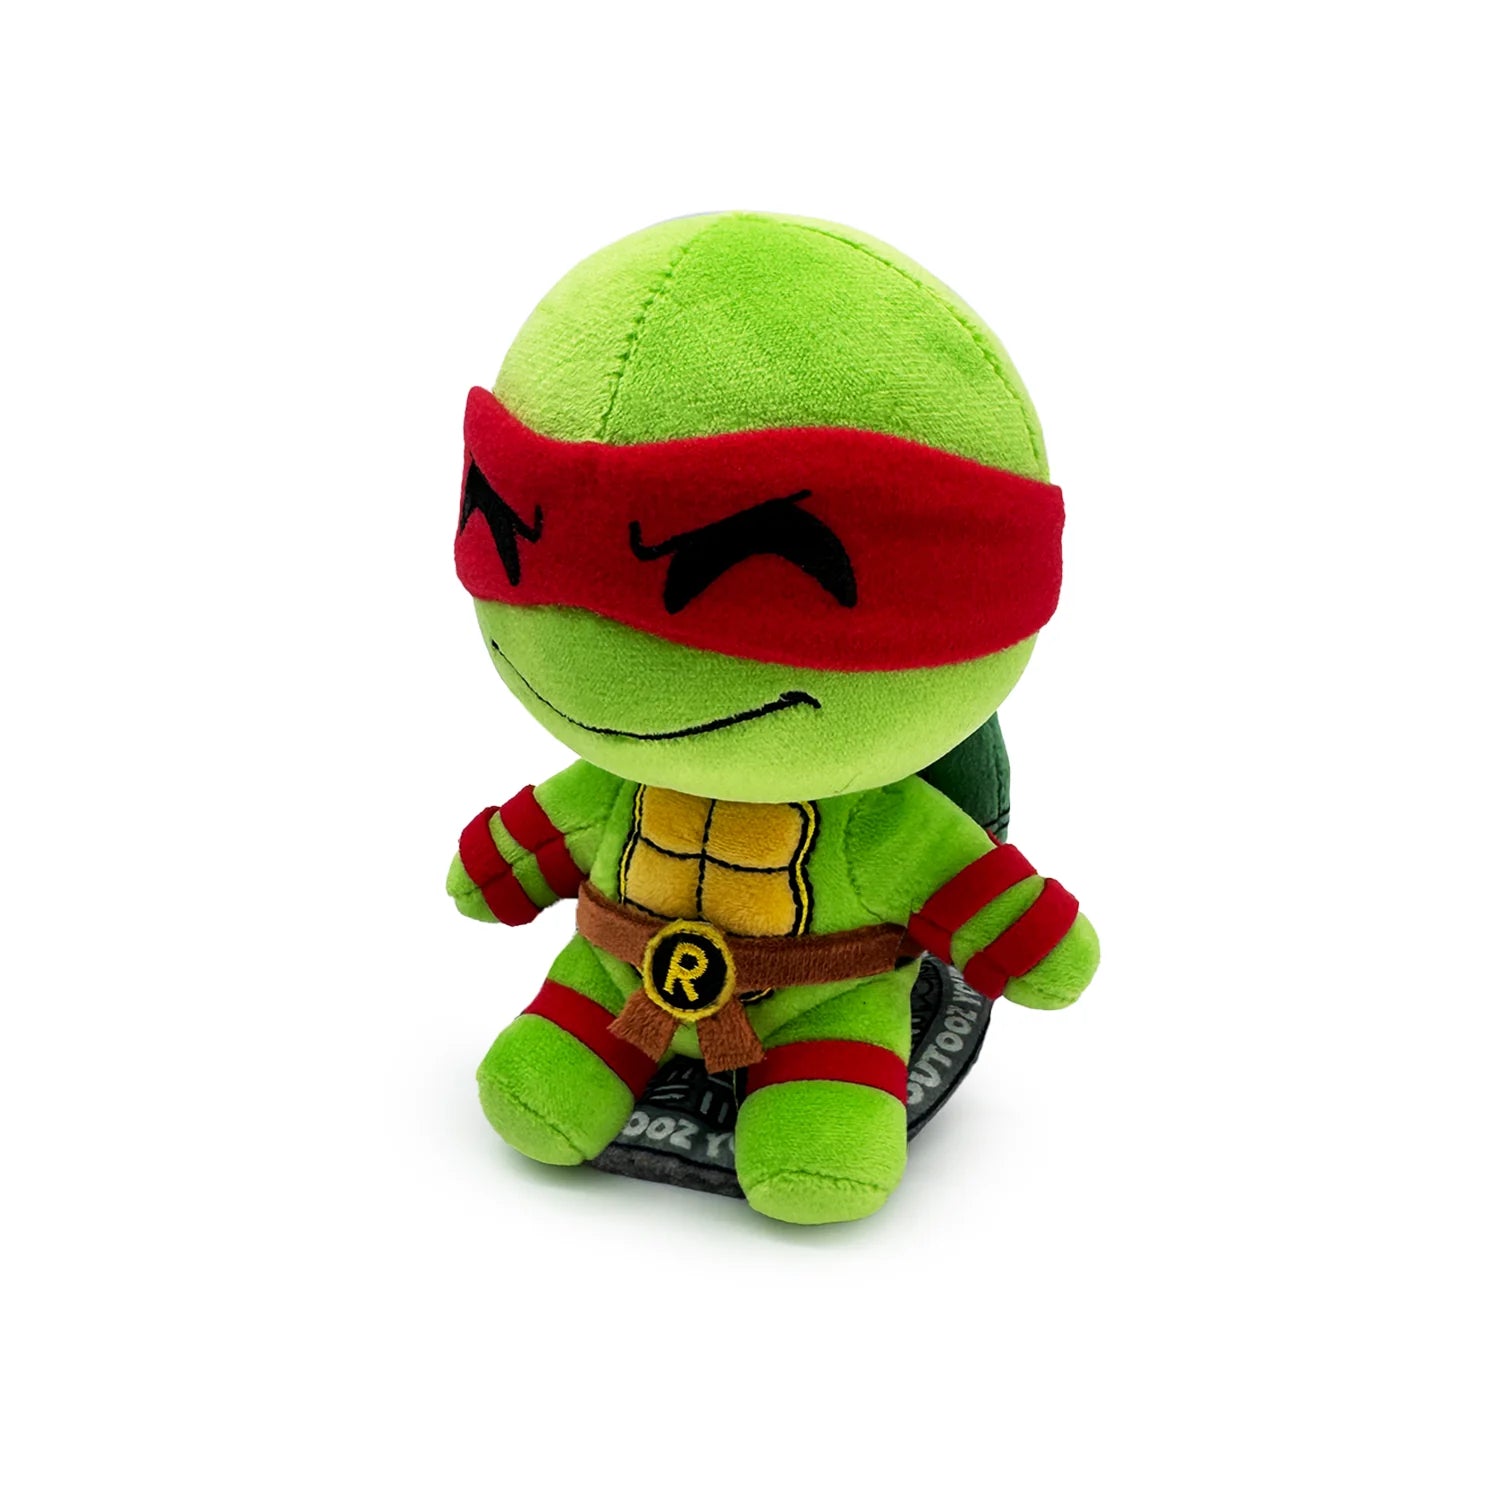 Youtooz Plush Shoulder Rider: TMNT Tortugas Ninja - Raphael Peluche 6 Pulgadas